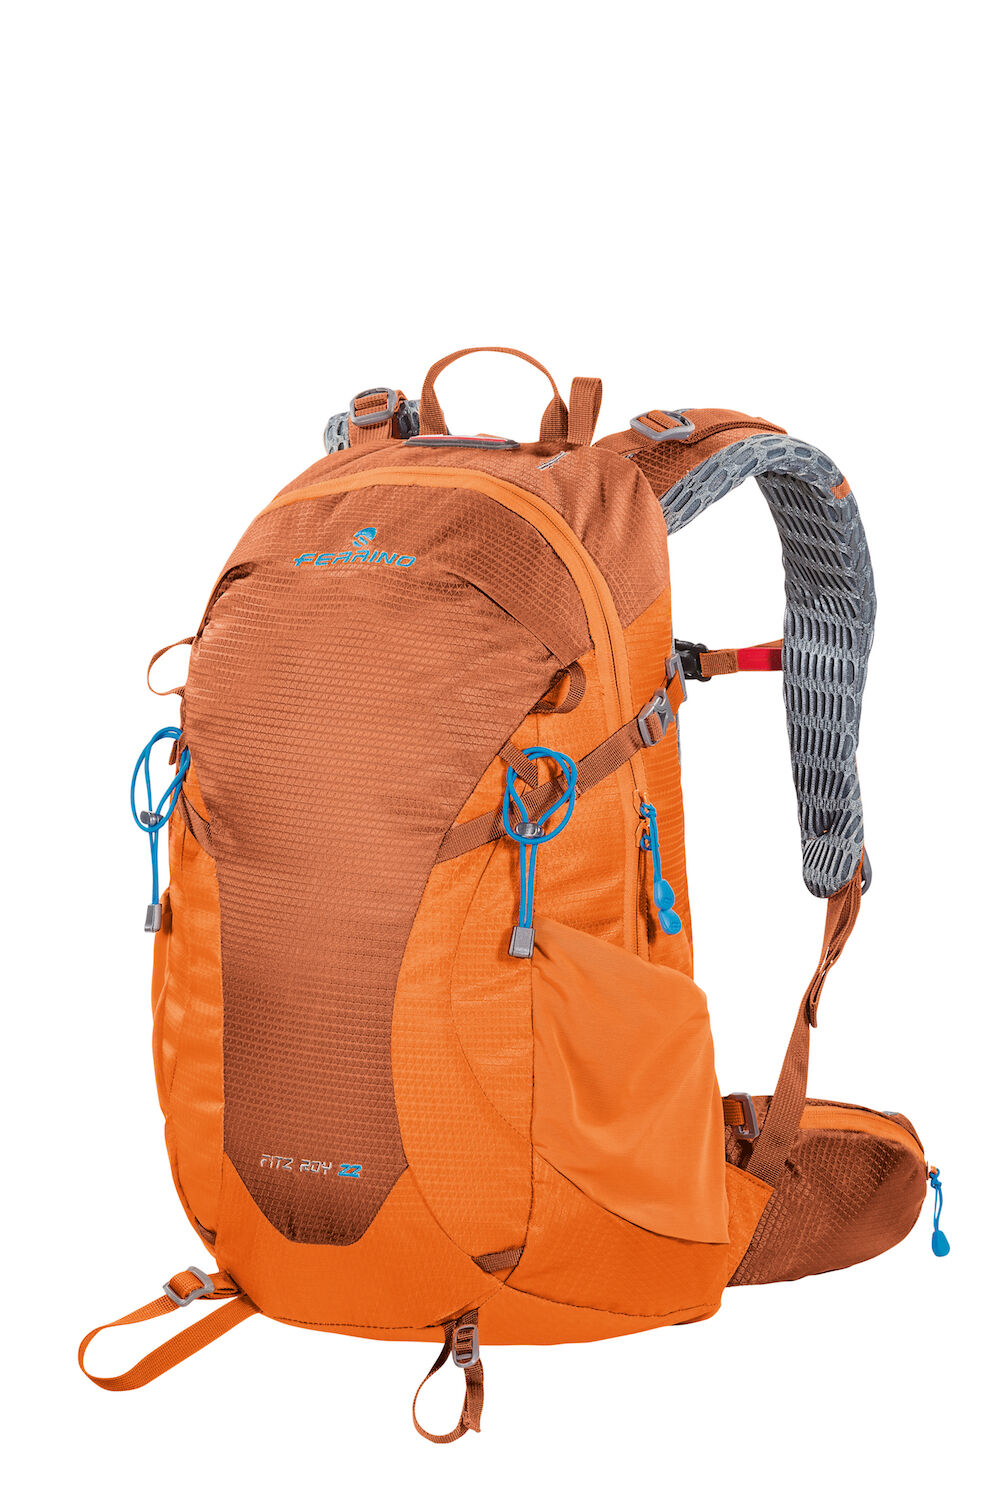 Ferrino Fitzroy 22 - Touring backpack